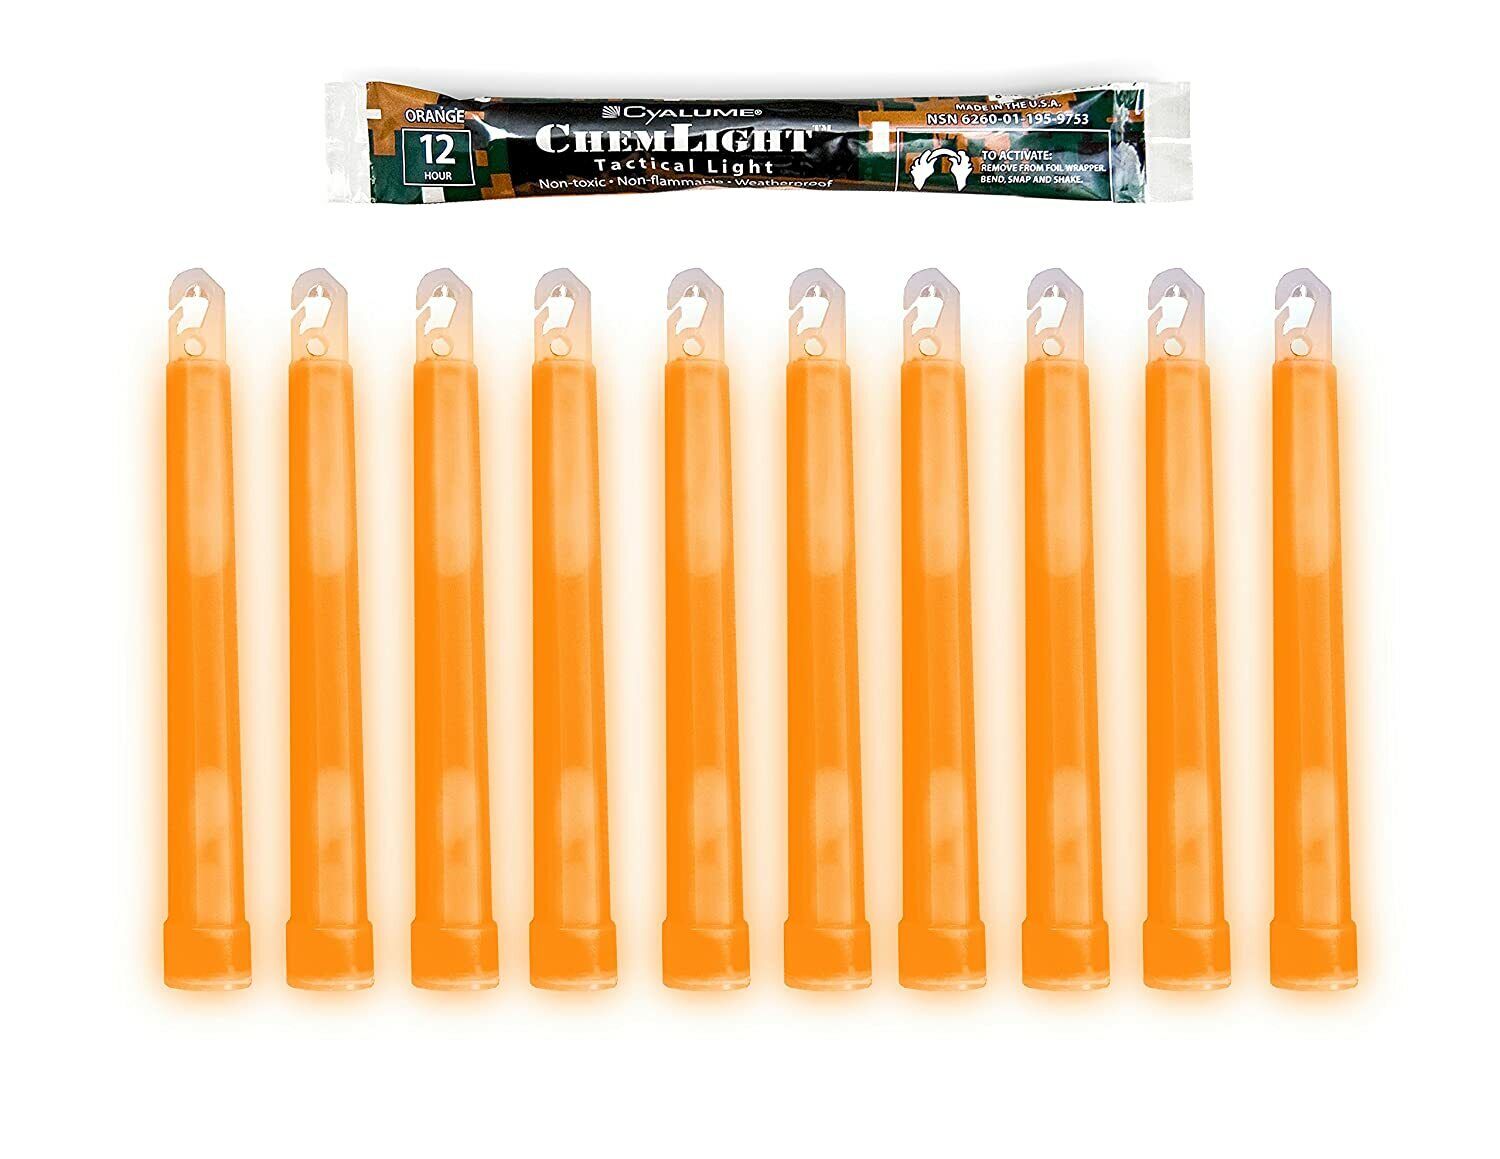 Lot of 12 CYALUME Tactical Lightsticks Orange 12 HR EXP 08/2023